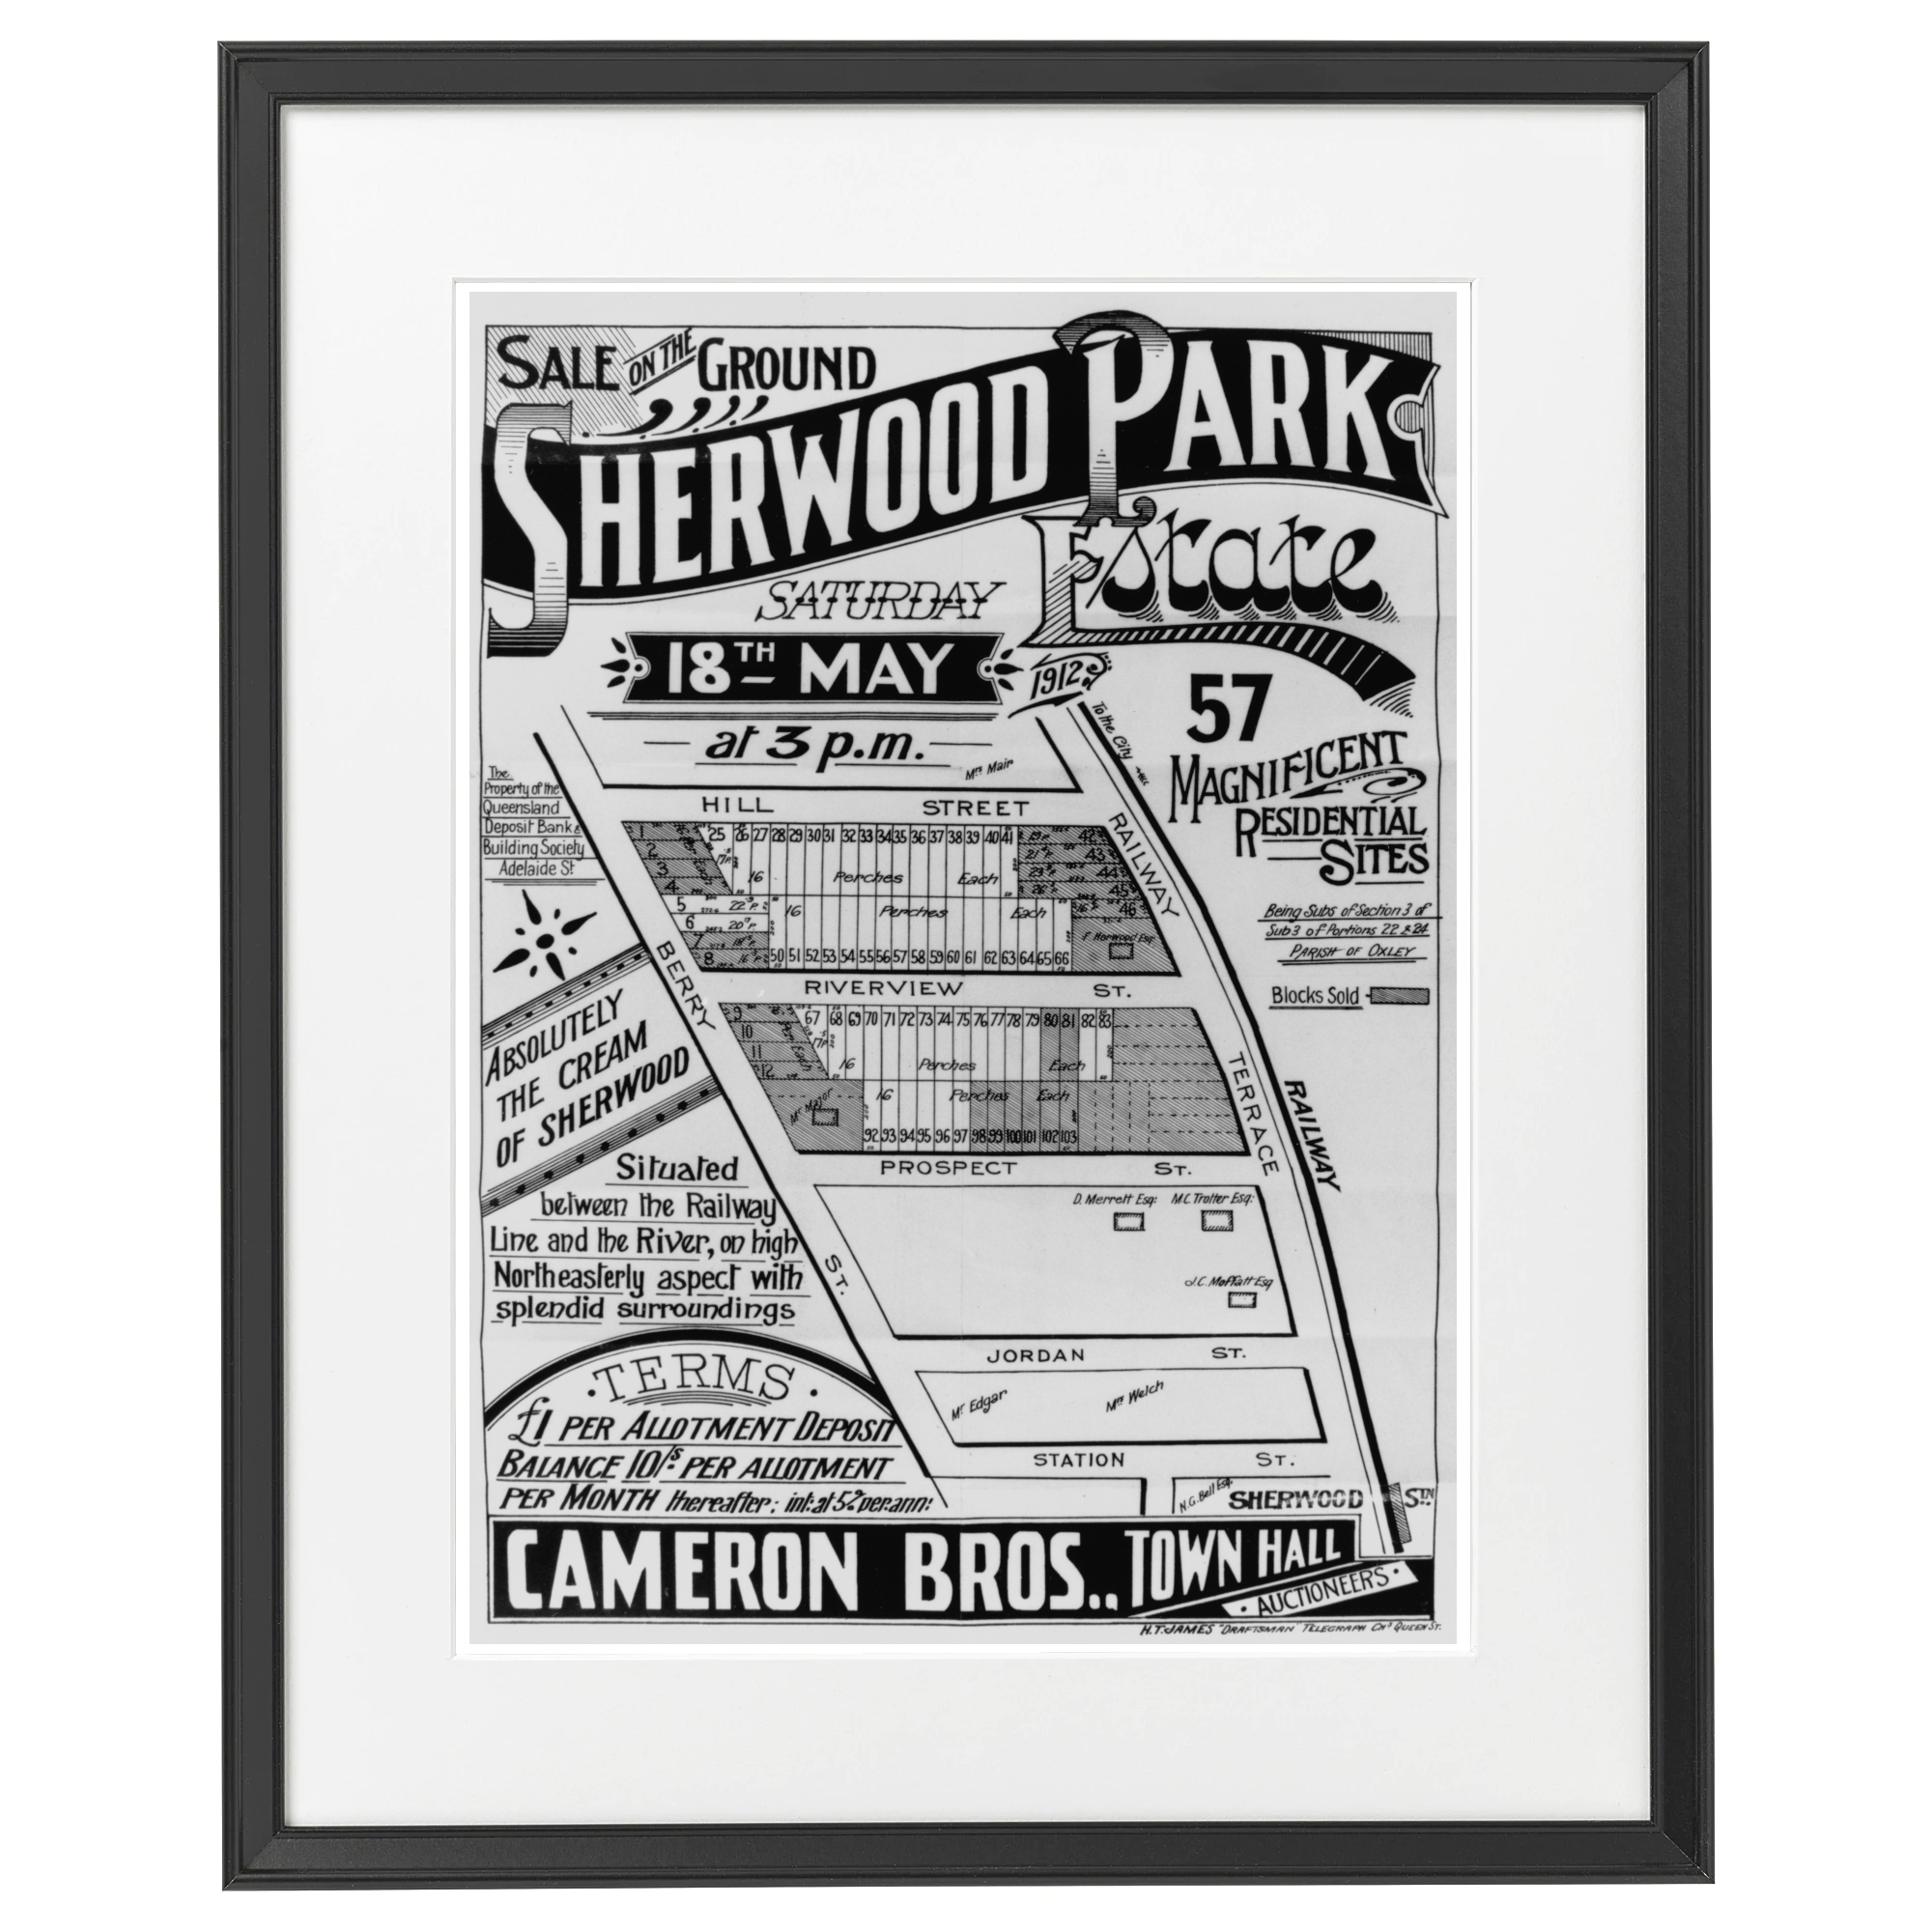 1912 Sherwood - Sherwood Park Estate - 109 years old today